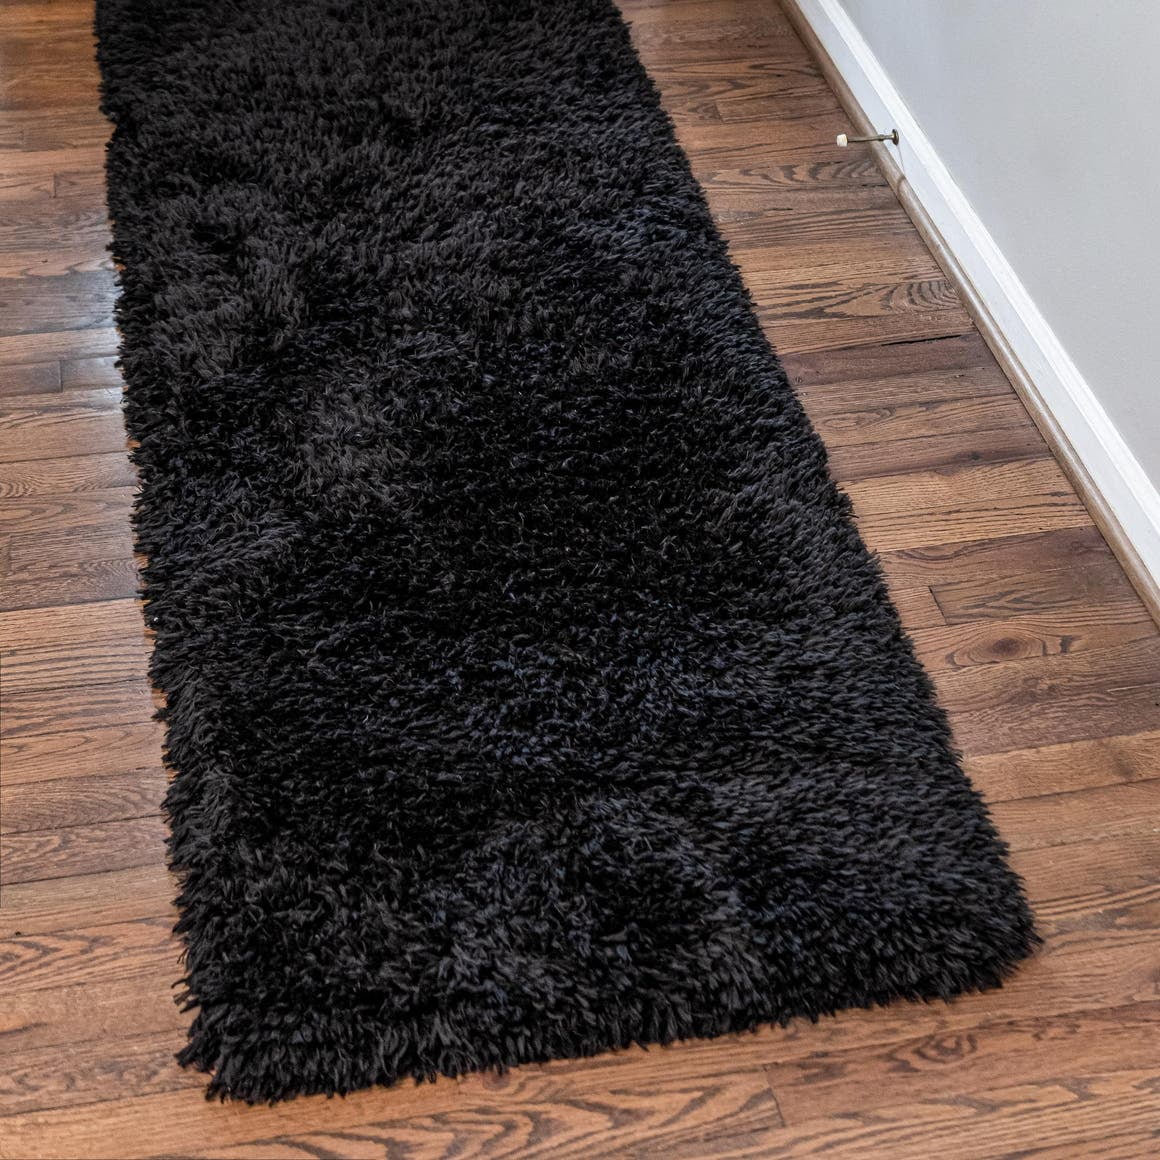 Area Shaggy Rug Non Slip Living Room Bedroom Carpet Hallway Runner Non Shed Pile 